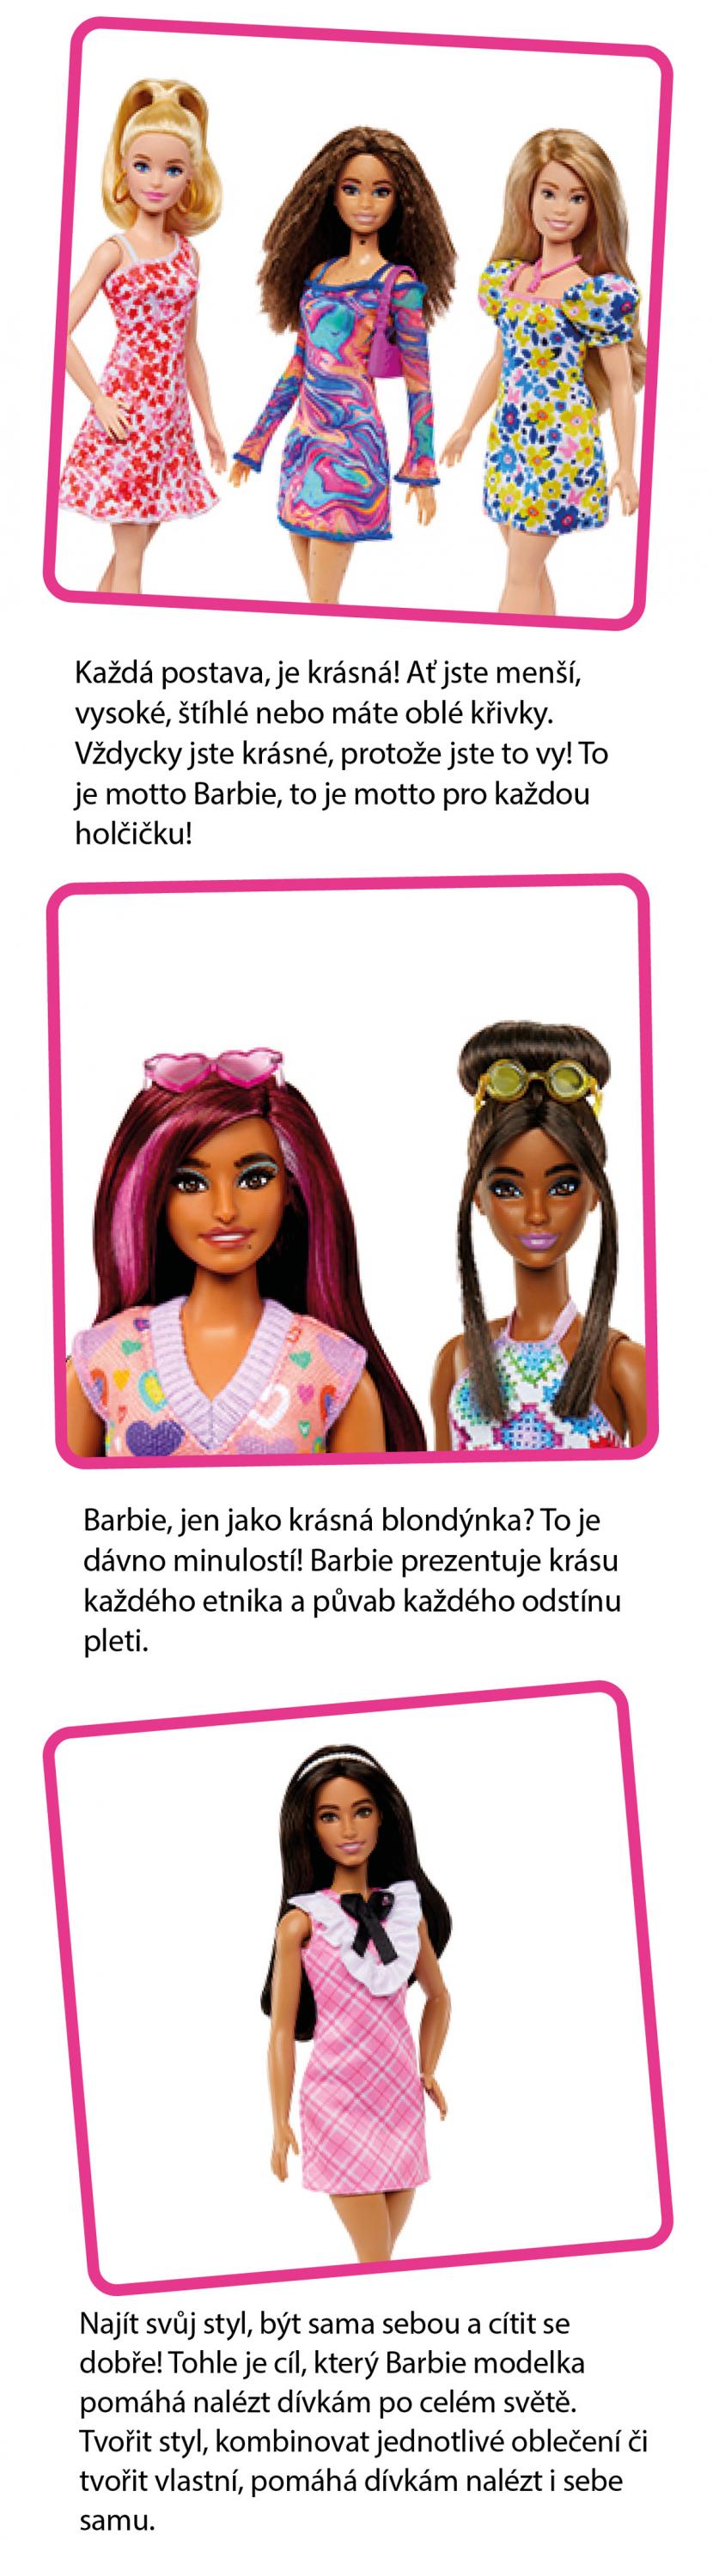 We are Barbie